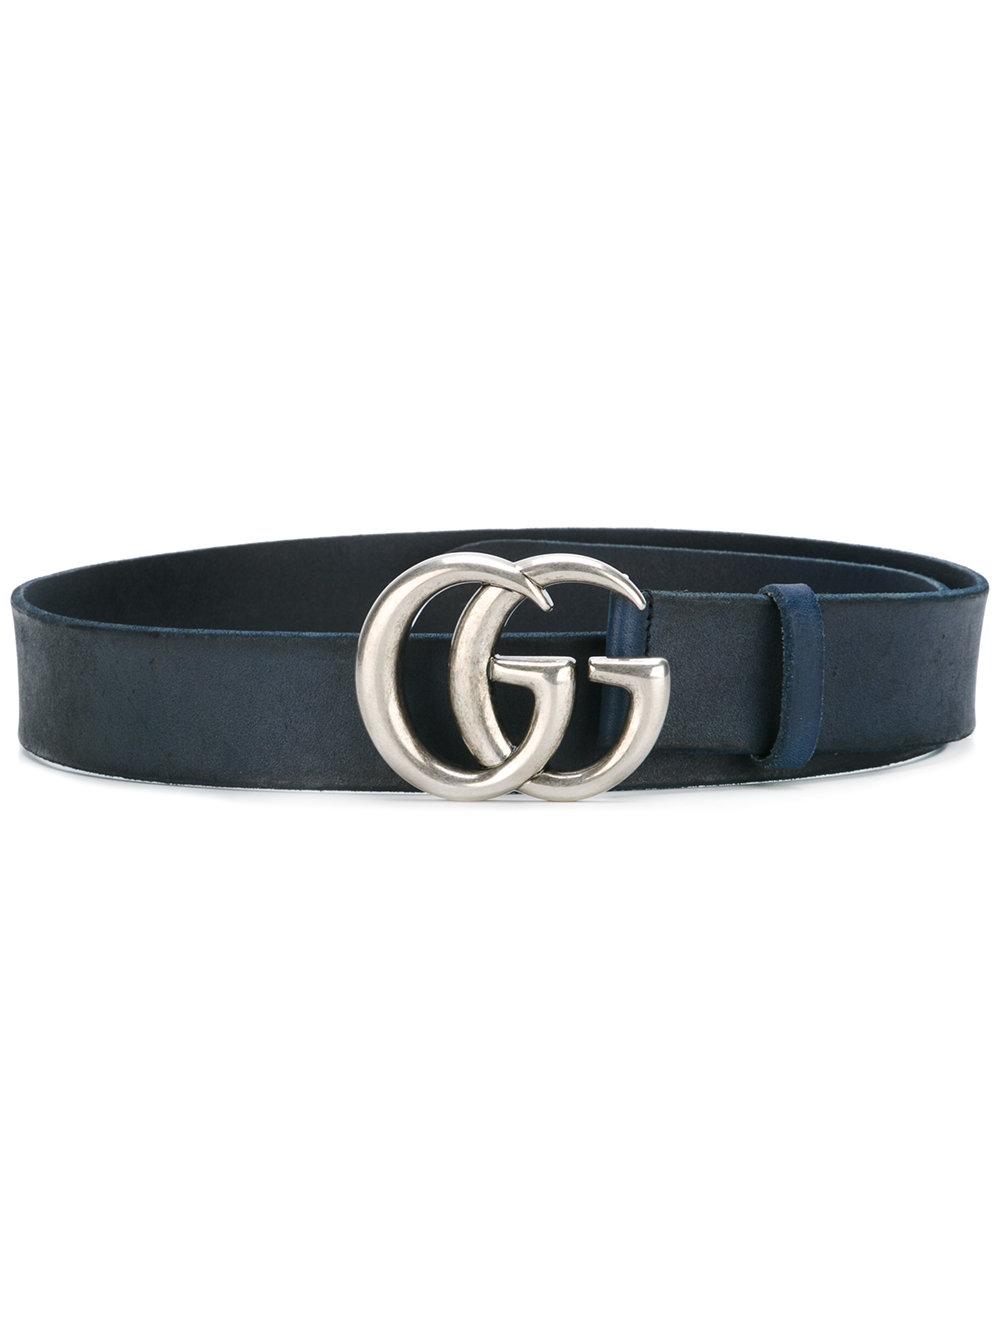 Gucci Double G Buckle Belt in Blue | Lyst